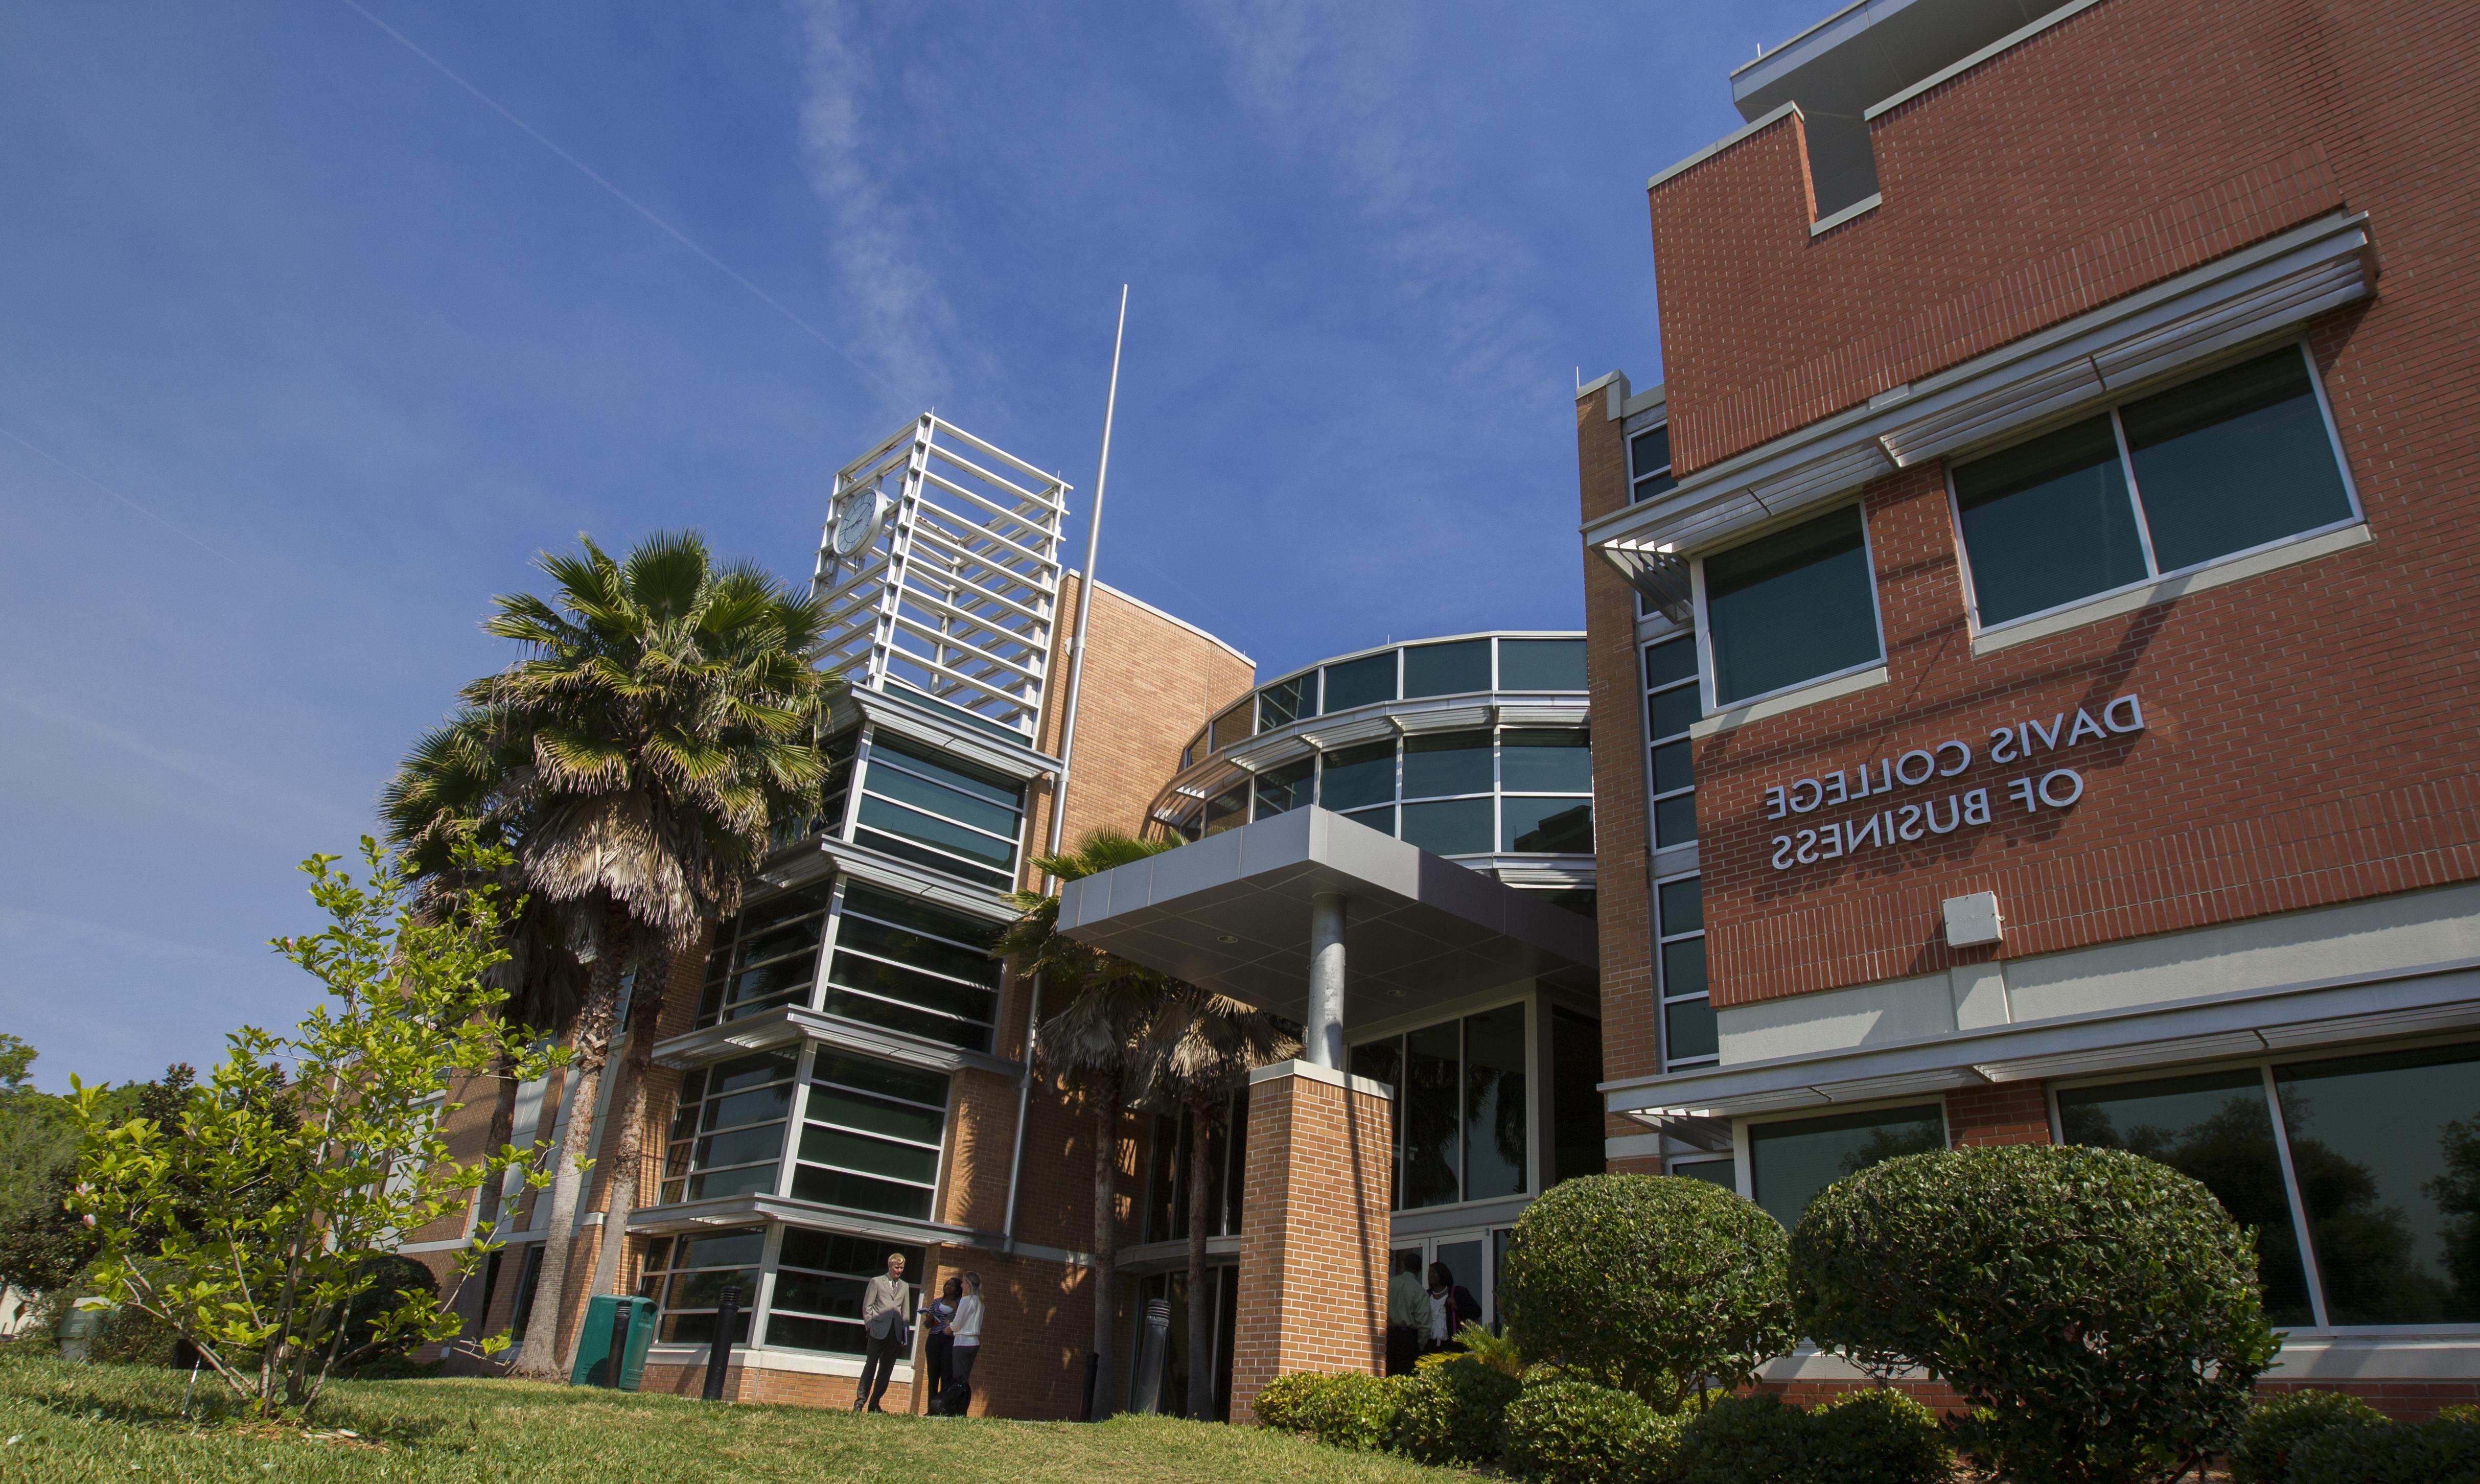 Jacksonville University Davis College of Business & Technology building.